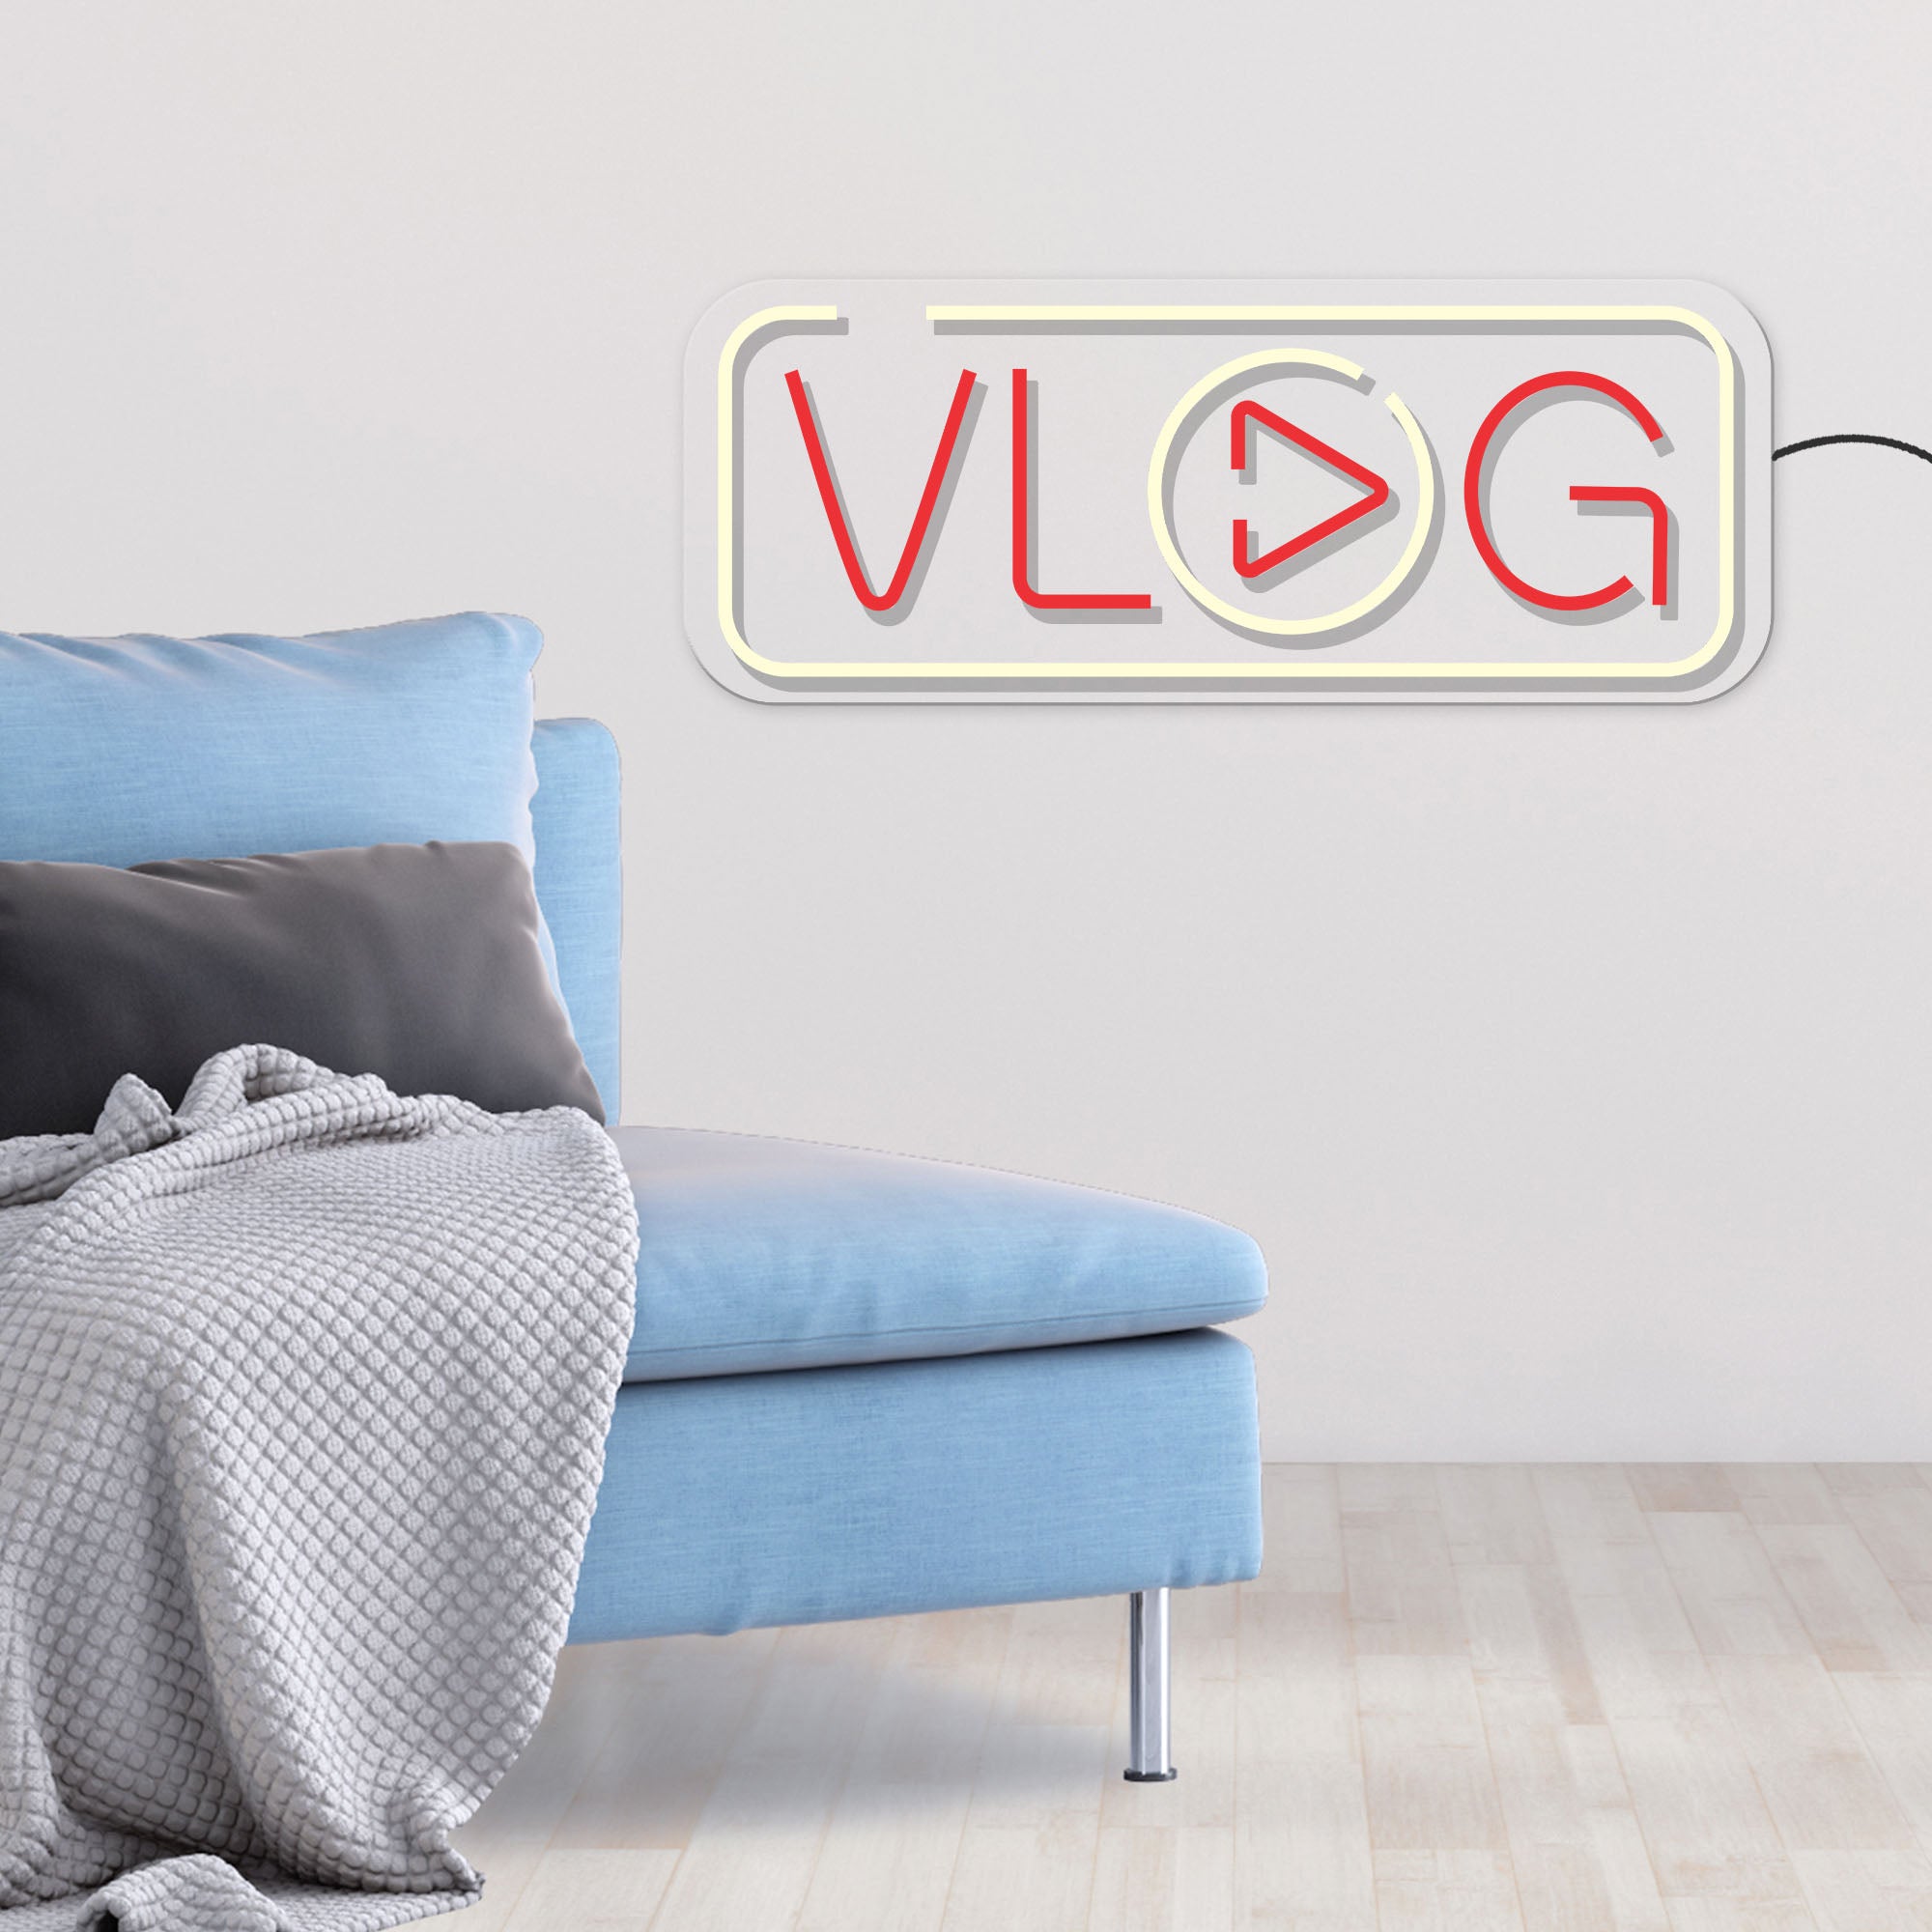 "Vlog" Text Neon Sign LED Light